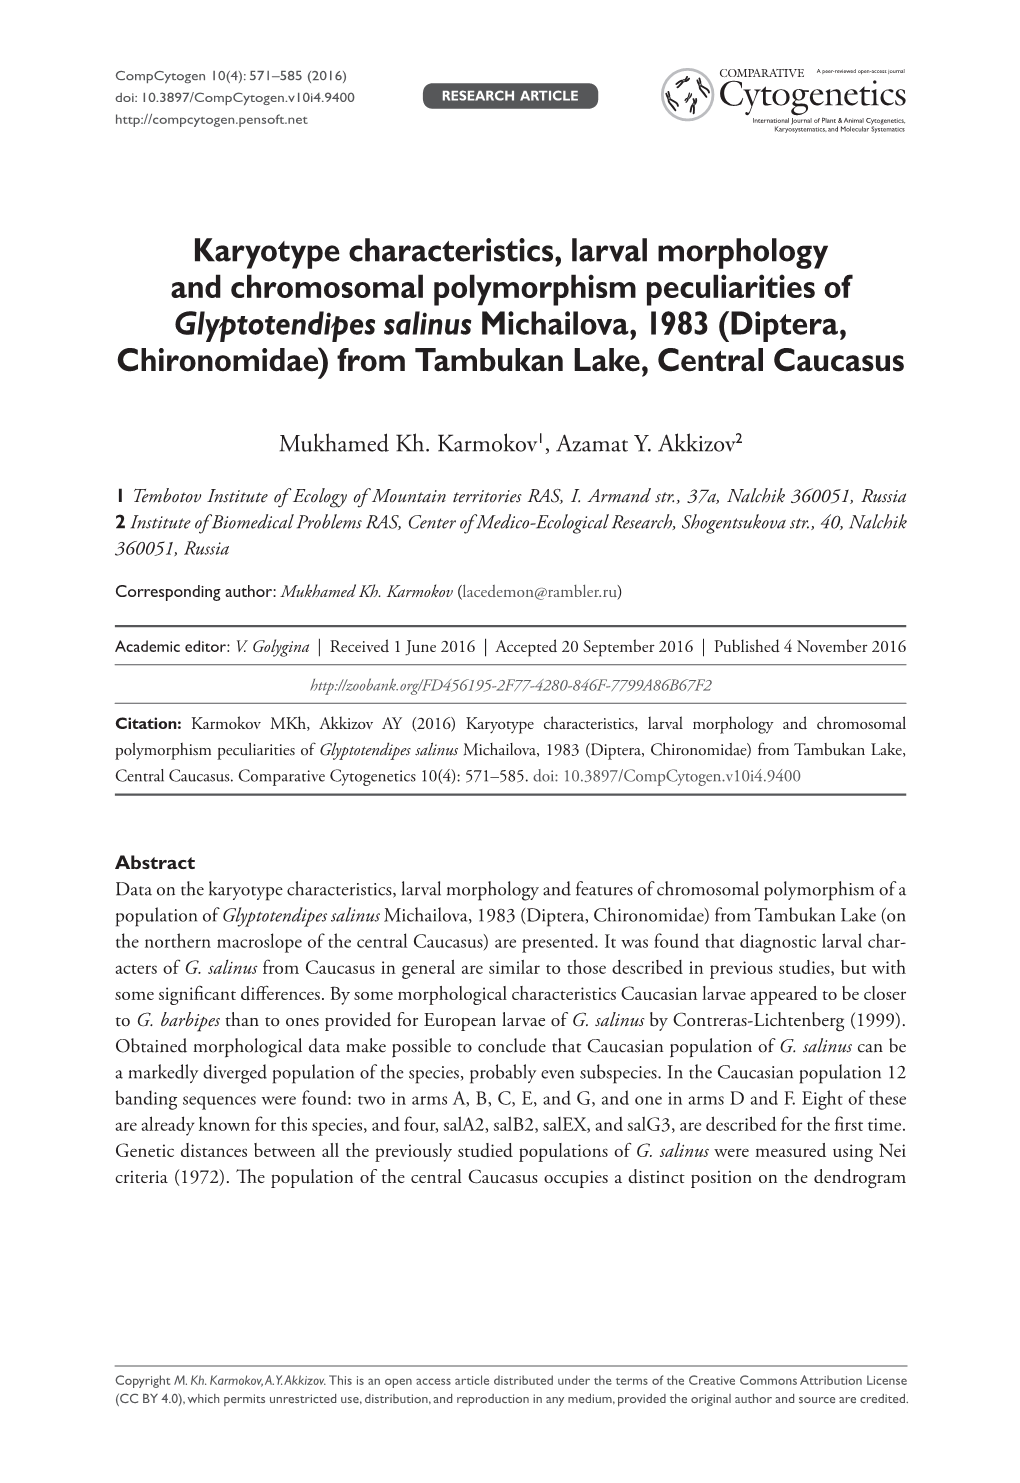 Karyotype Characteristics, Larval Morphology and Chromosomal Polymorphism Peculiarities of Glyptotendipes Salinus Michailova